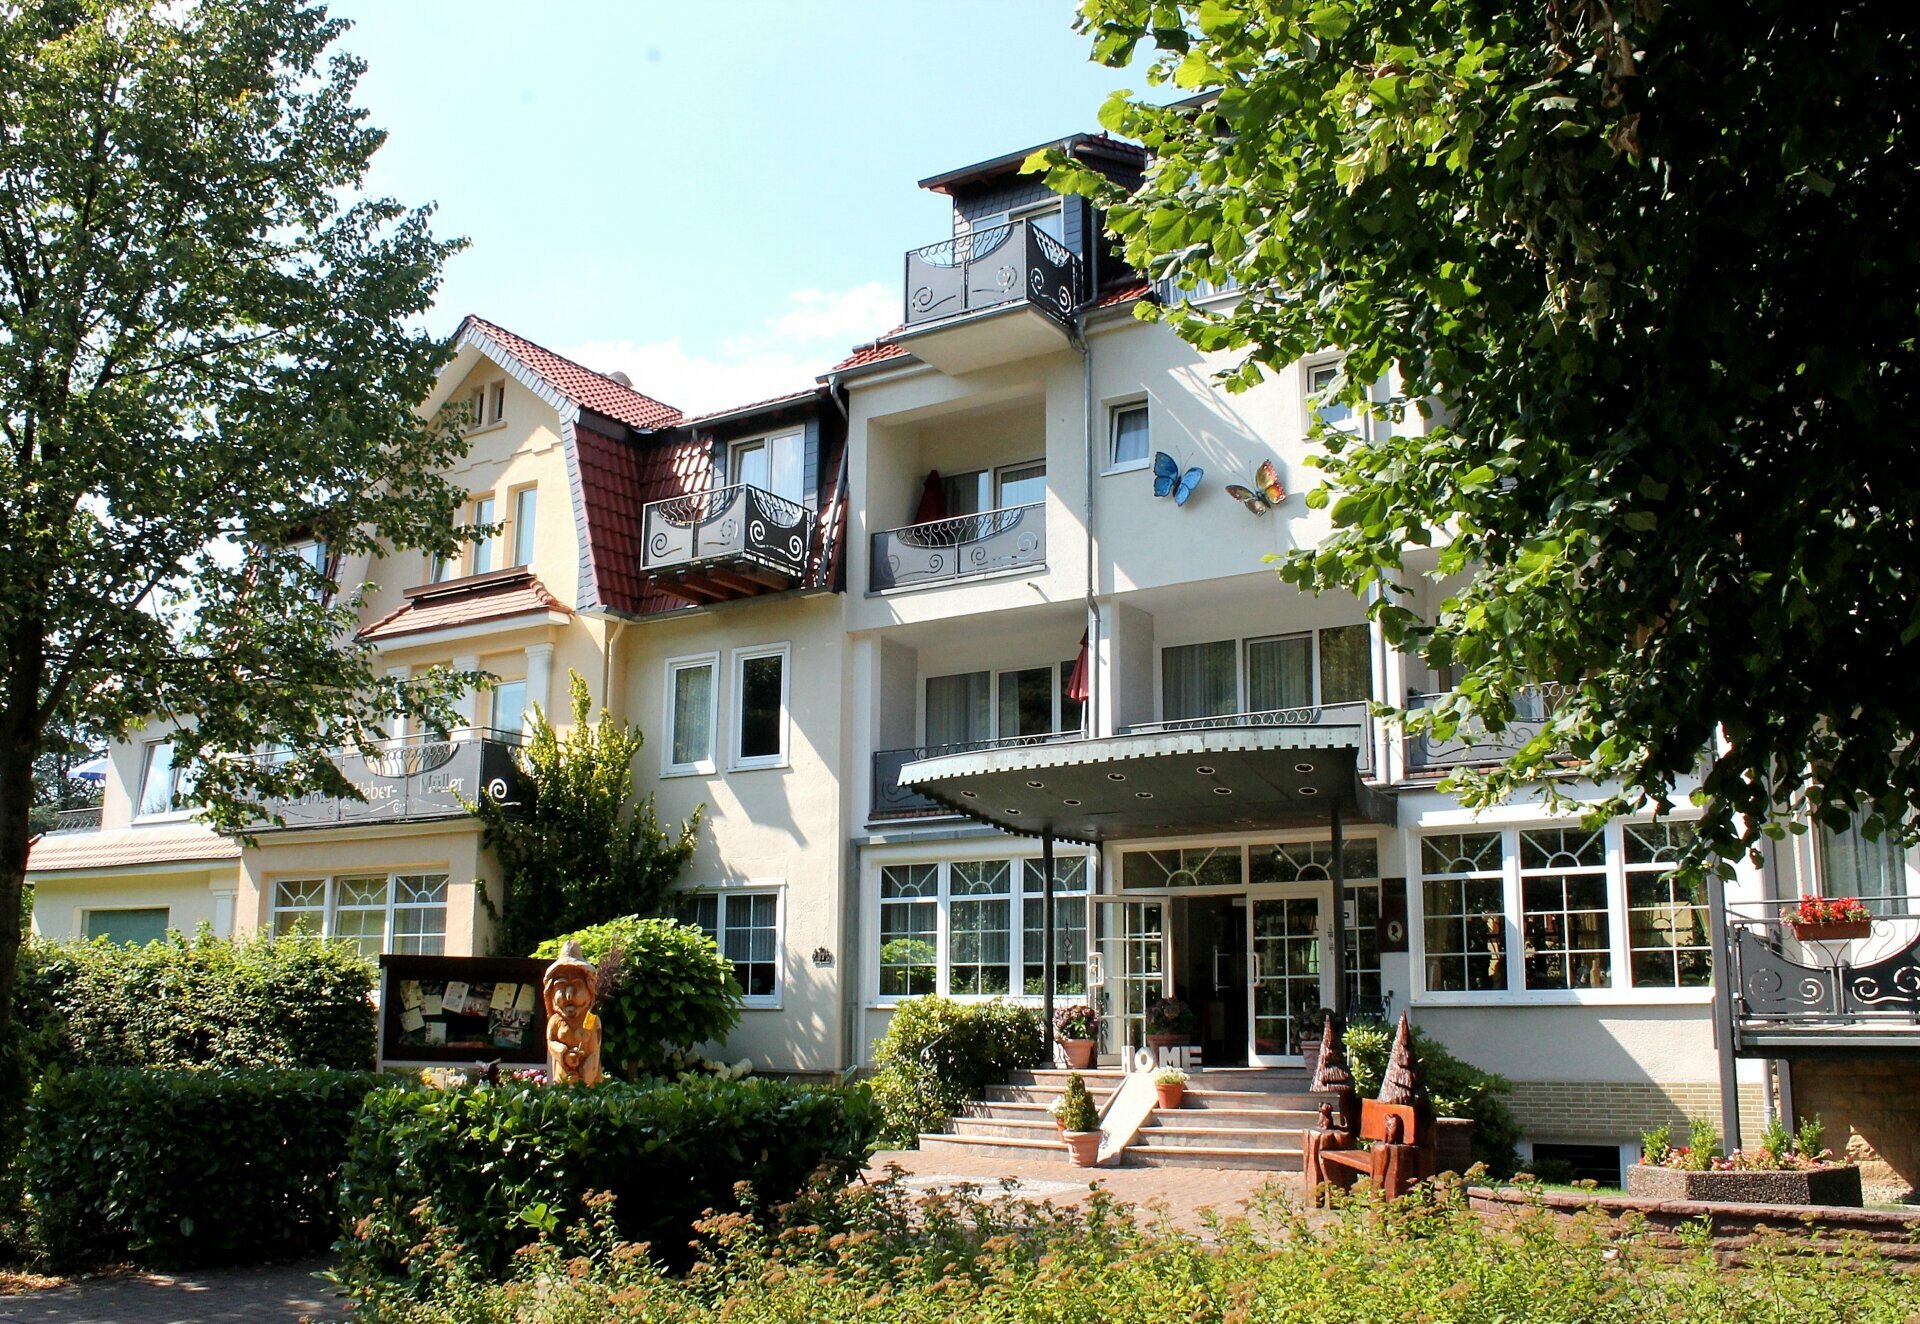 8 Tage Basenfasten – Parkhotel Weber-Müller  (4 Sterne) in Bad Lauterberg, Niedersachsen inkl. All Inclusive